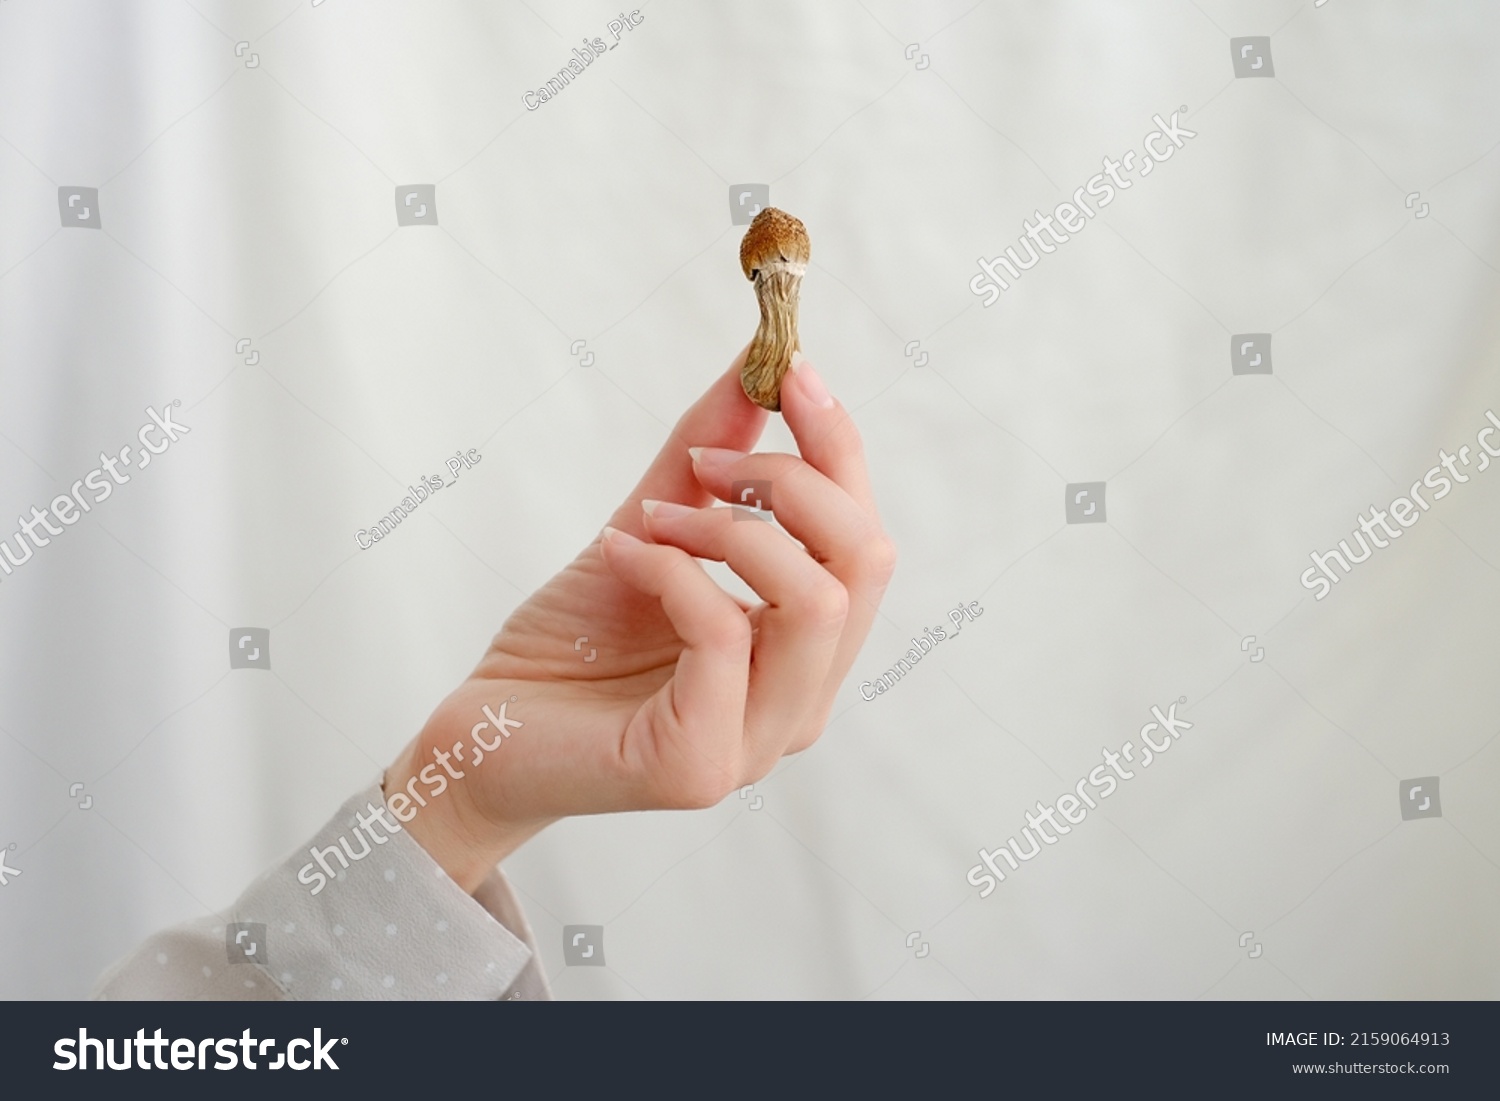 Psilocybin mushroom in woman's hand on grey background. Psychedelic magic mushrooms trip. Medical usage. Microdosing concept. Psilocybe cubensis #2159064913